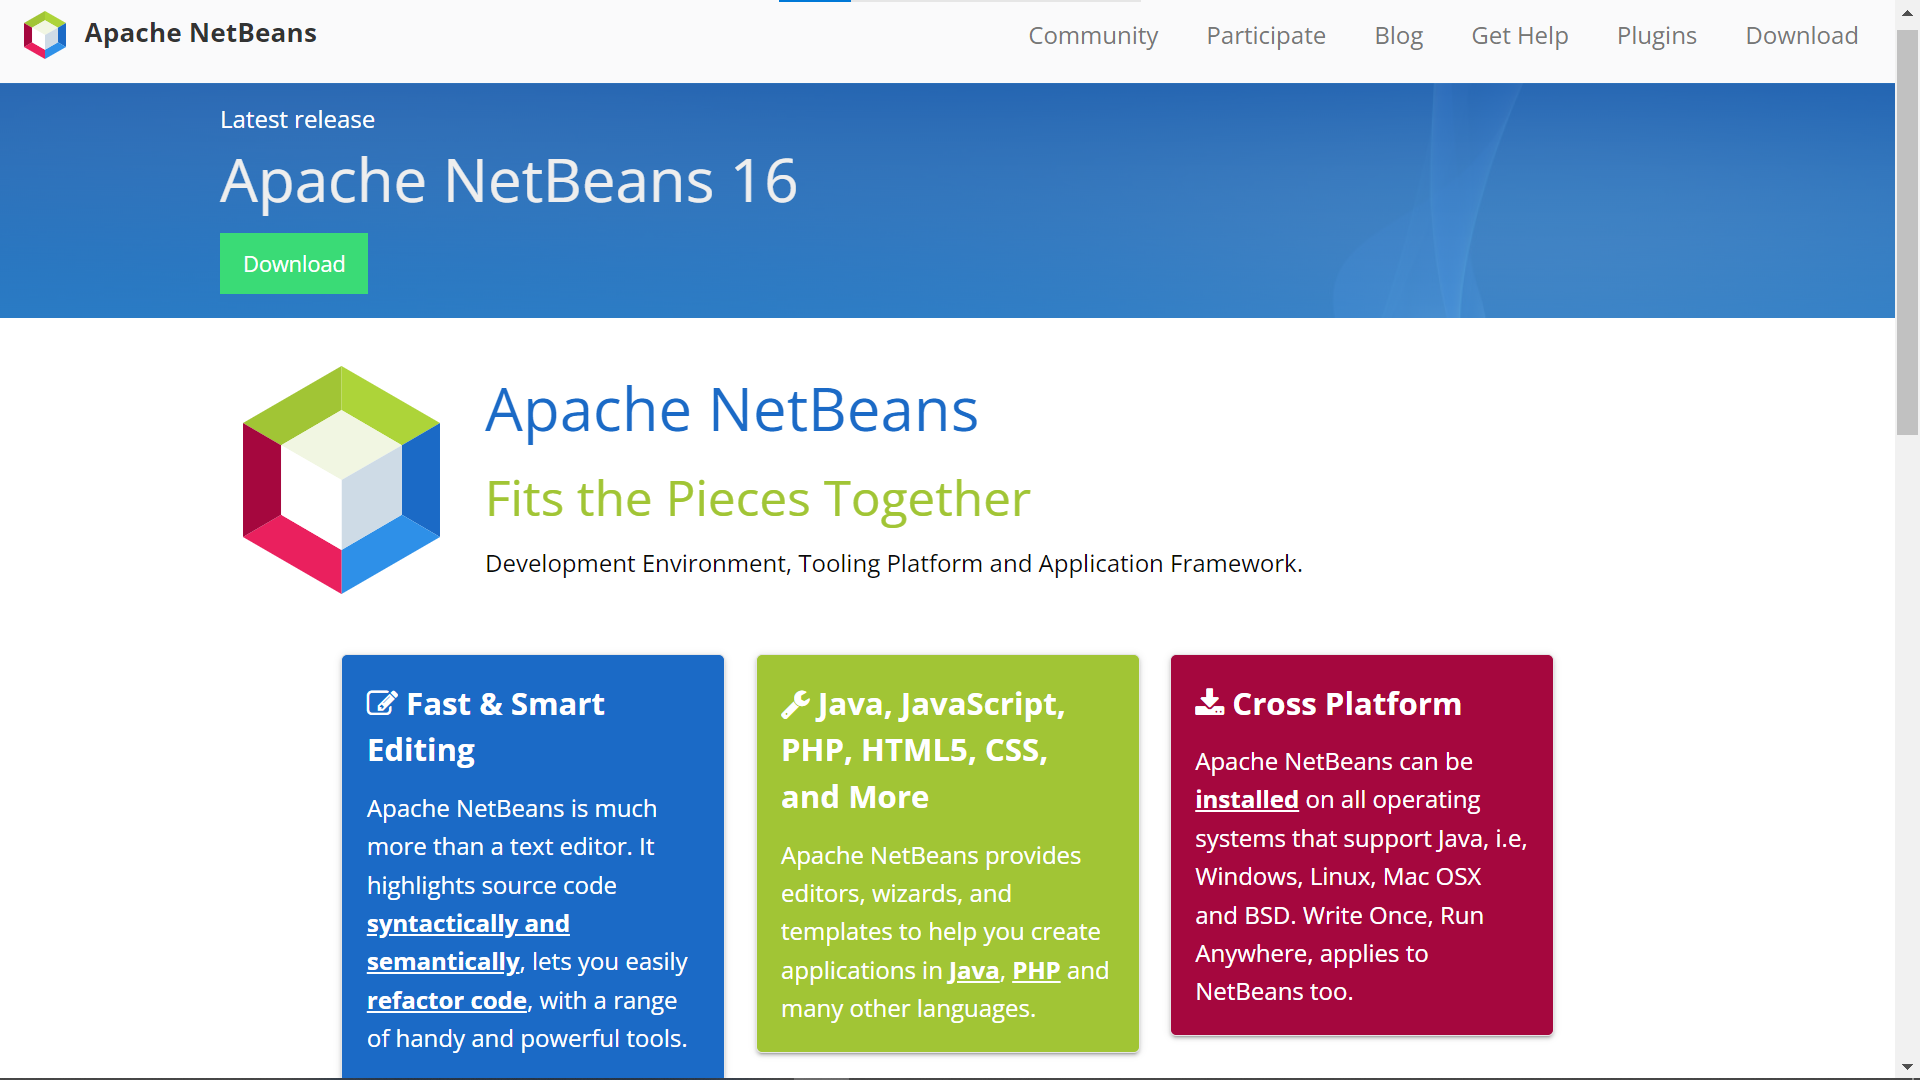 NetBeans, an IDE platform for developing websites.